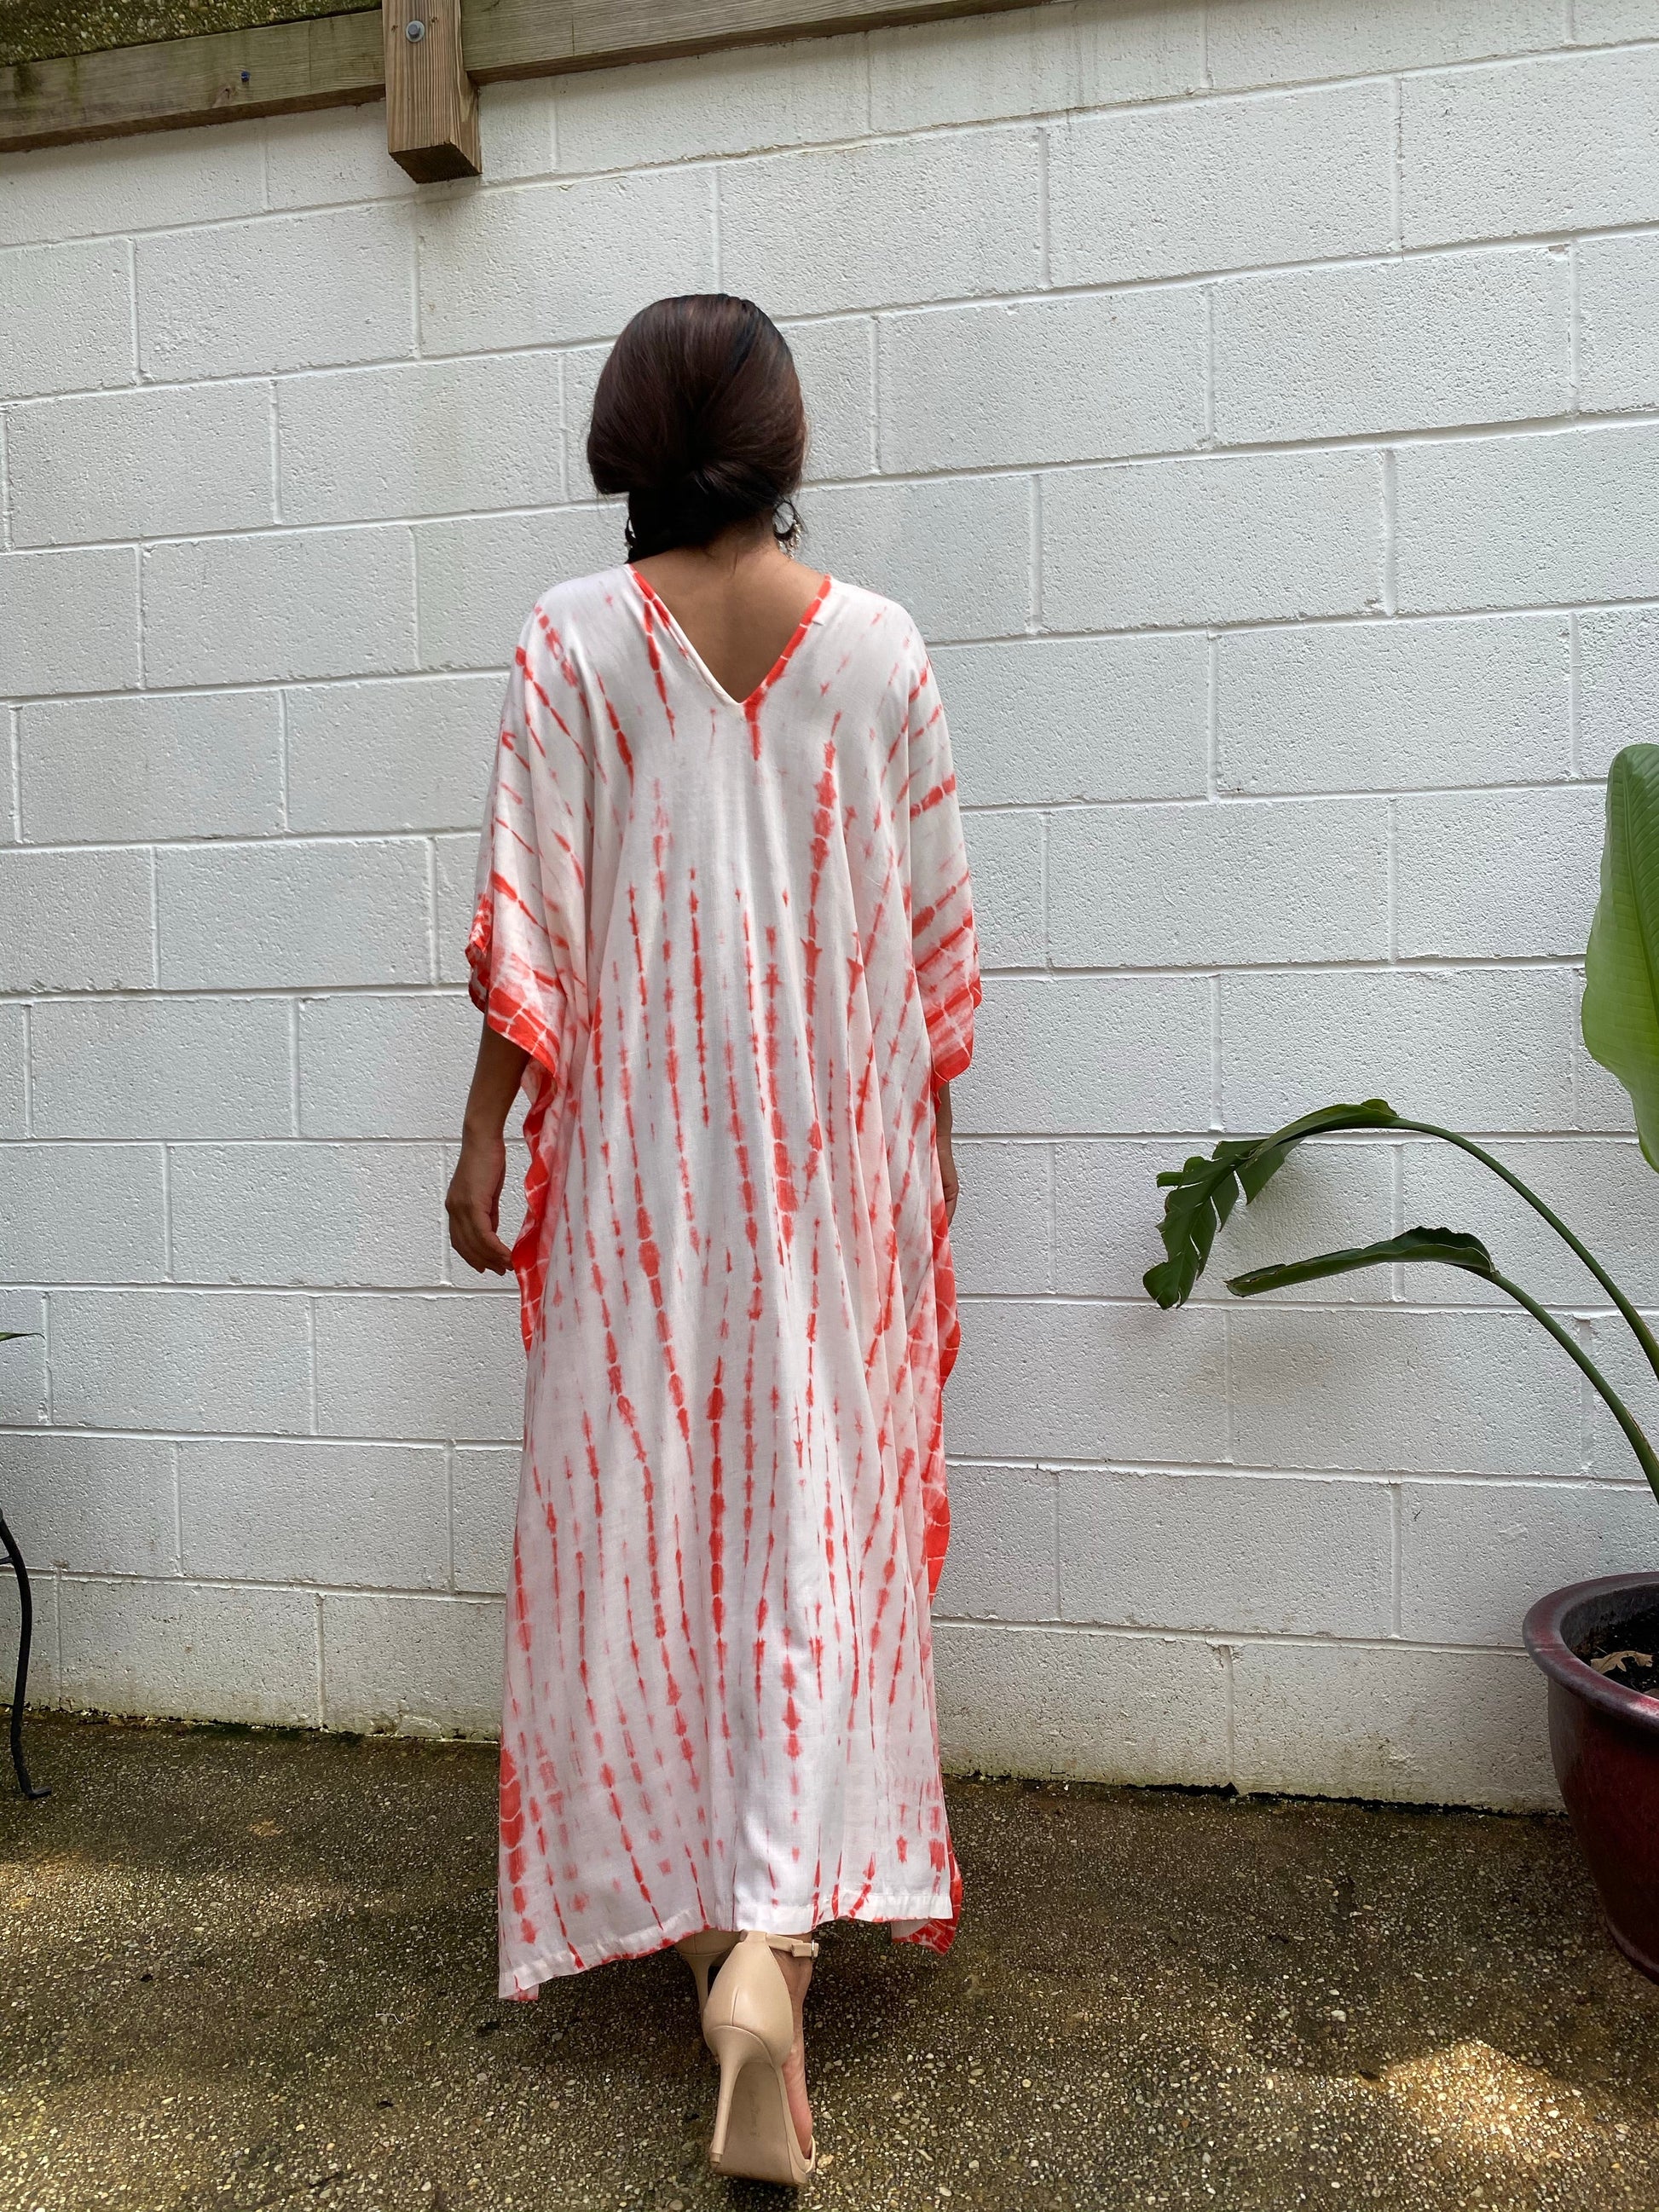 MALA handworks Nora Kaftan in White and Orange Tie Dye